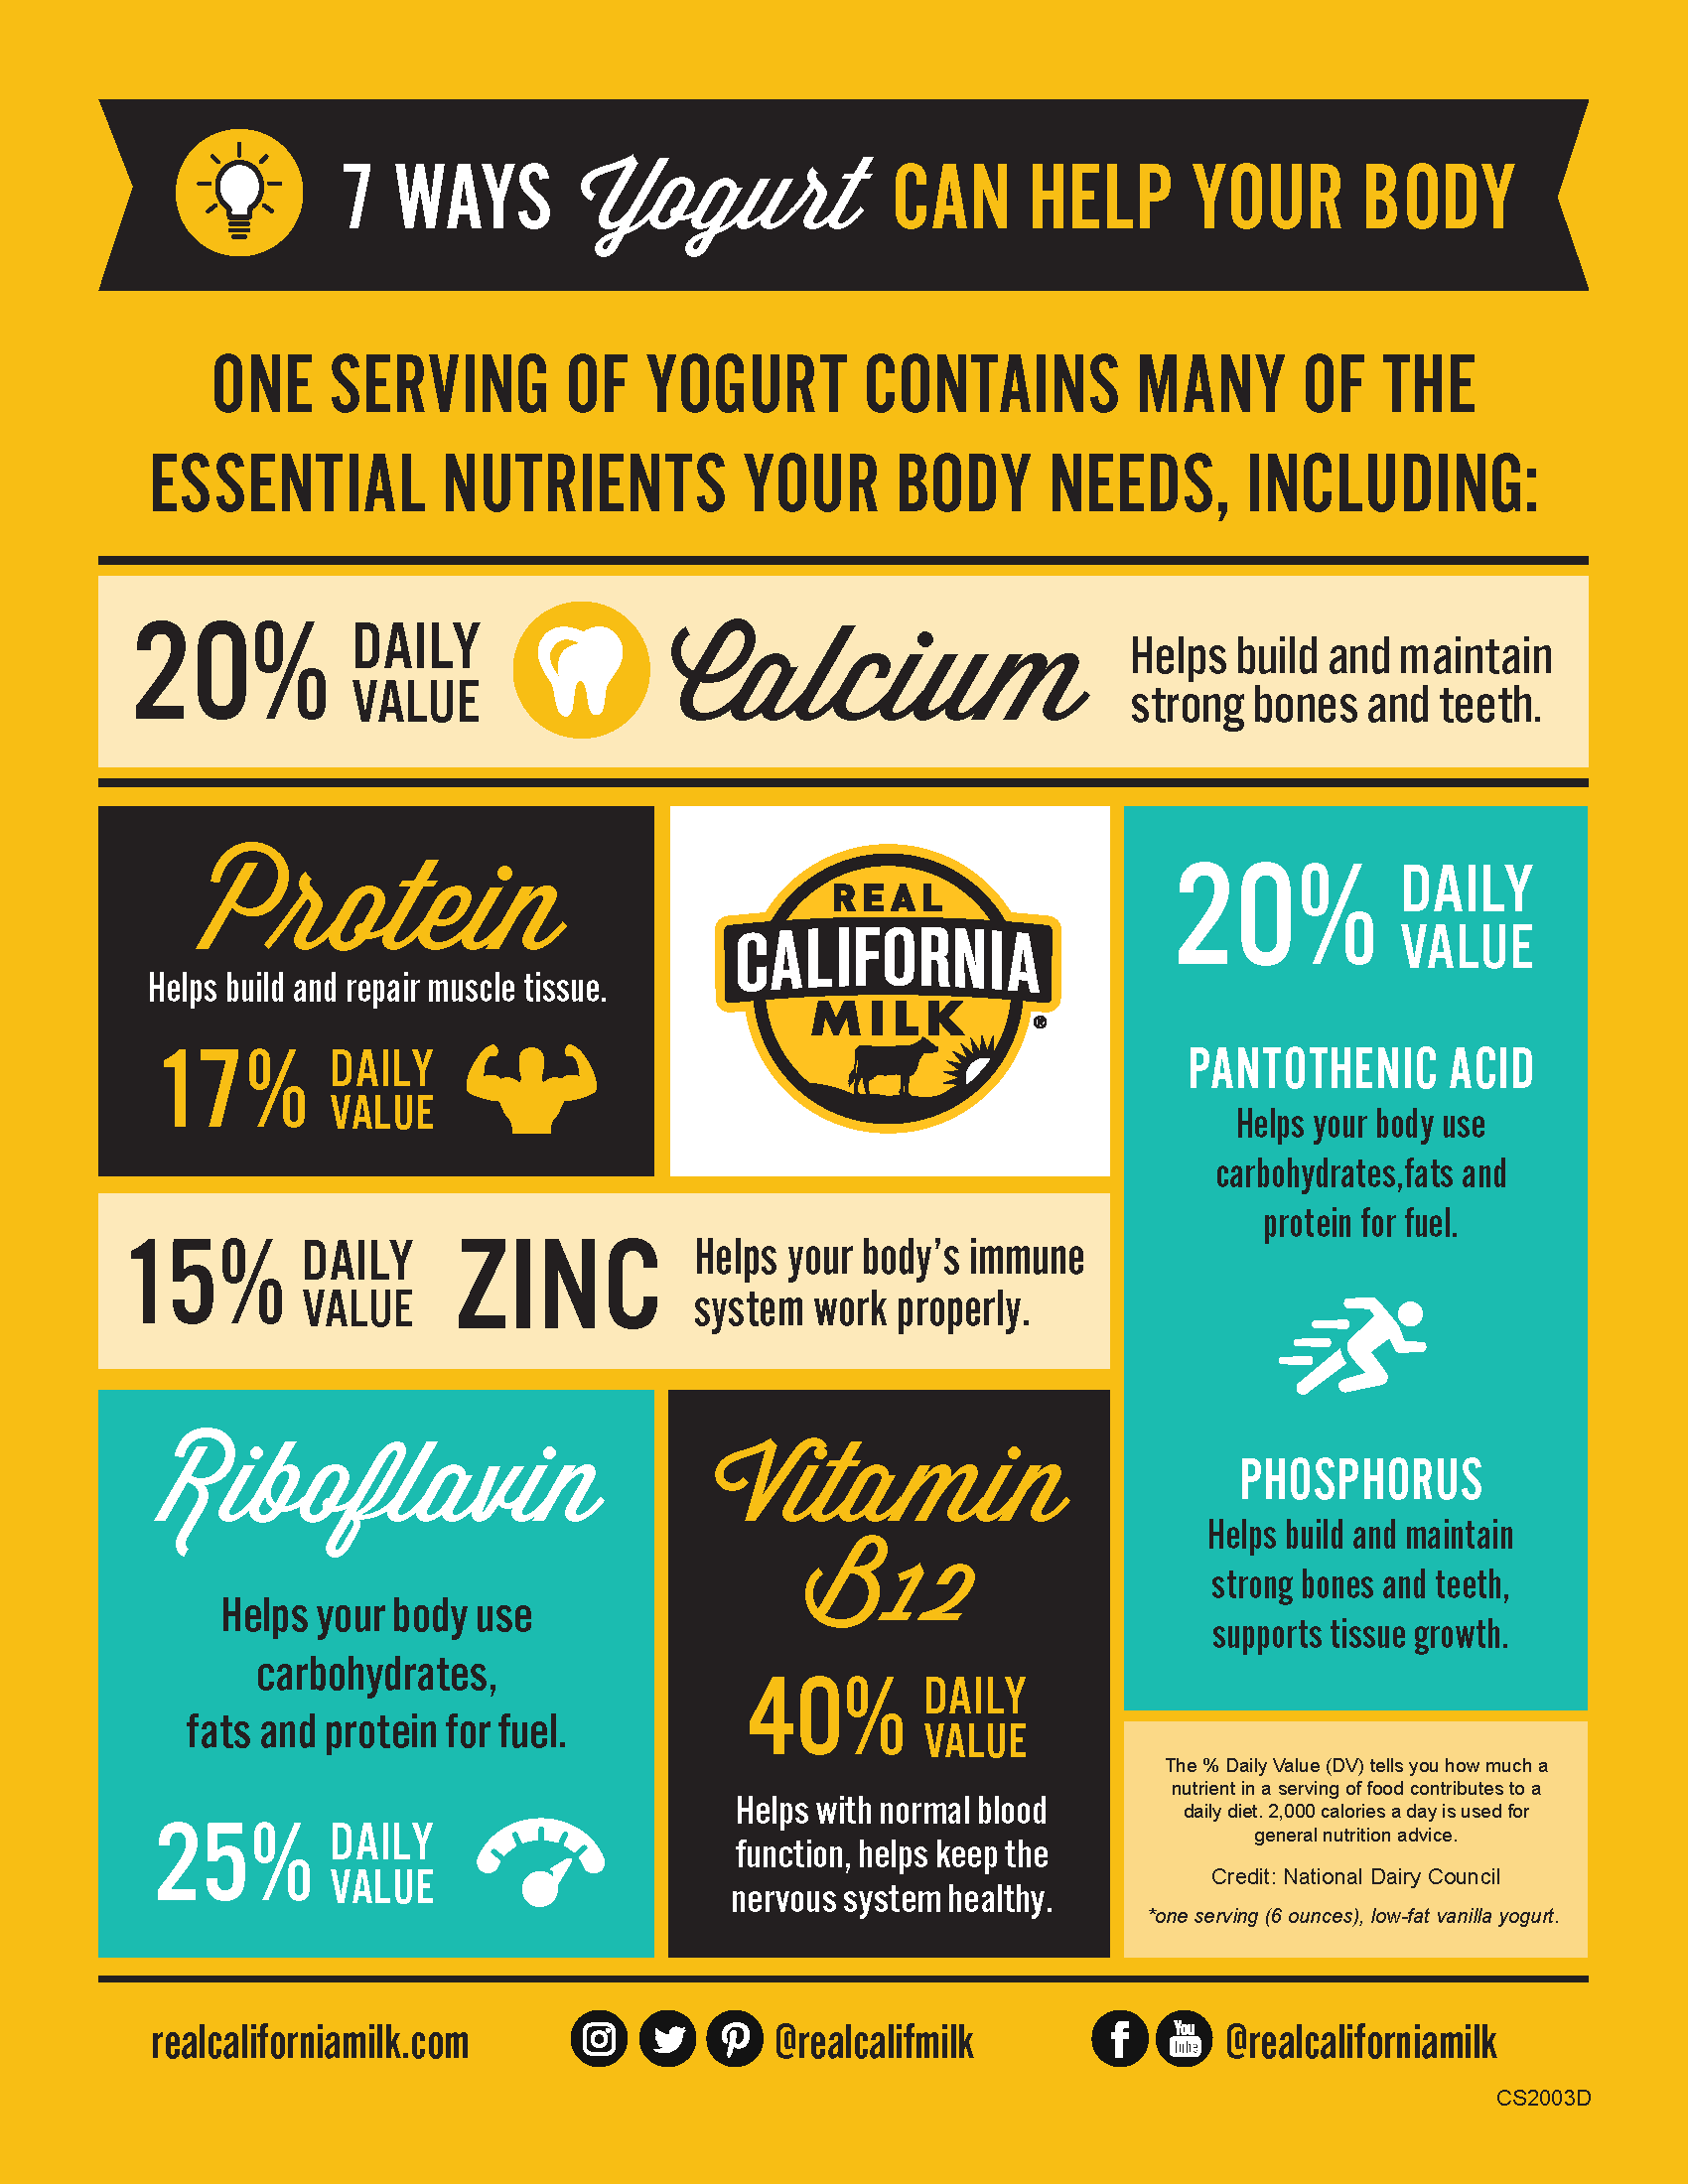 7 Ways Yogurt Can Help Your Body